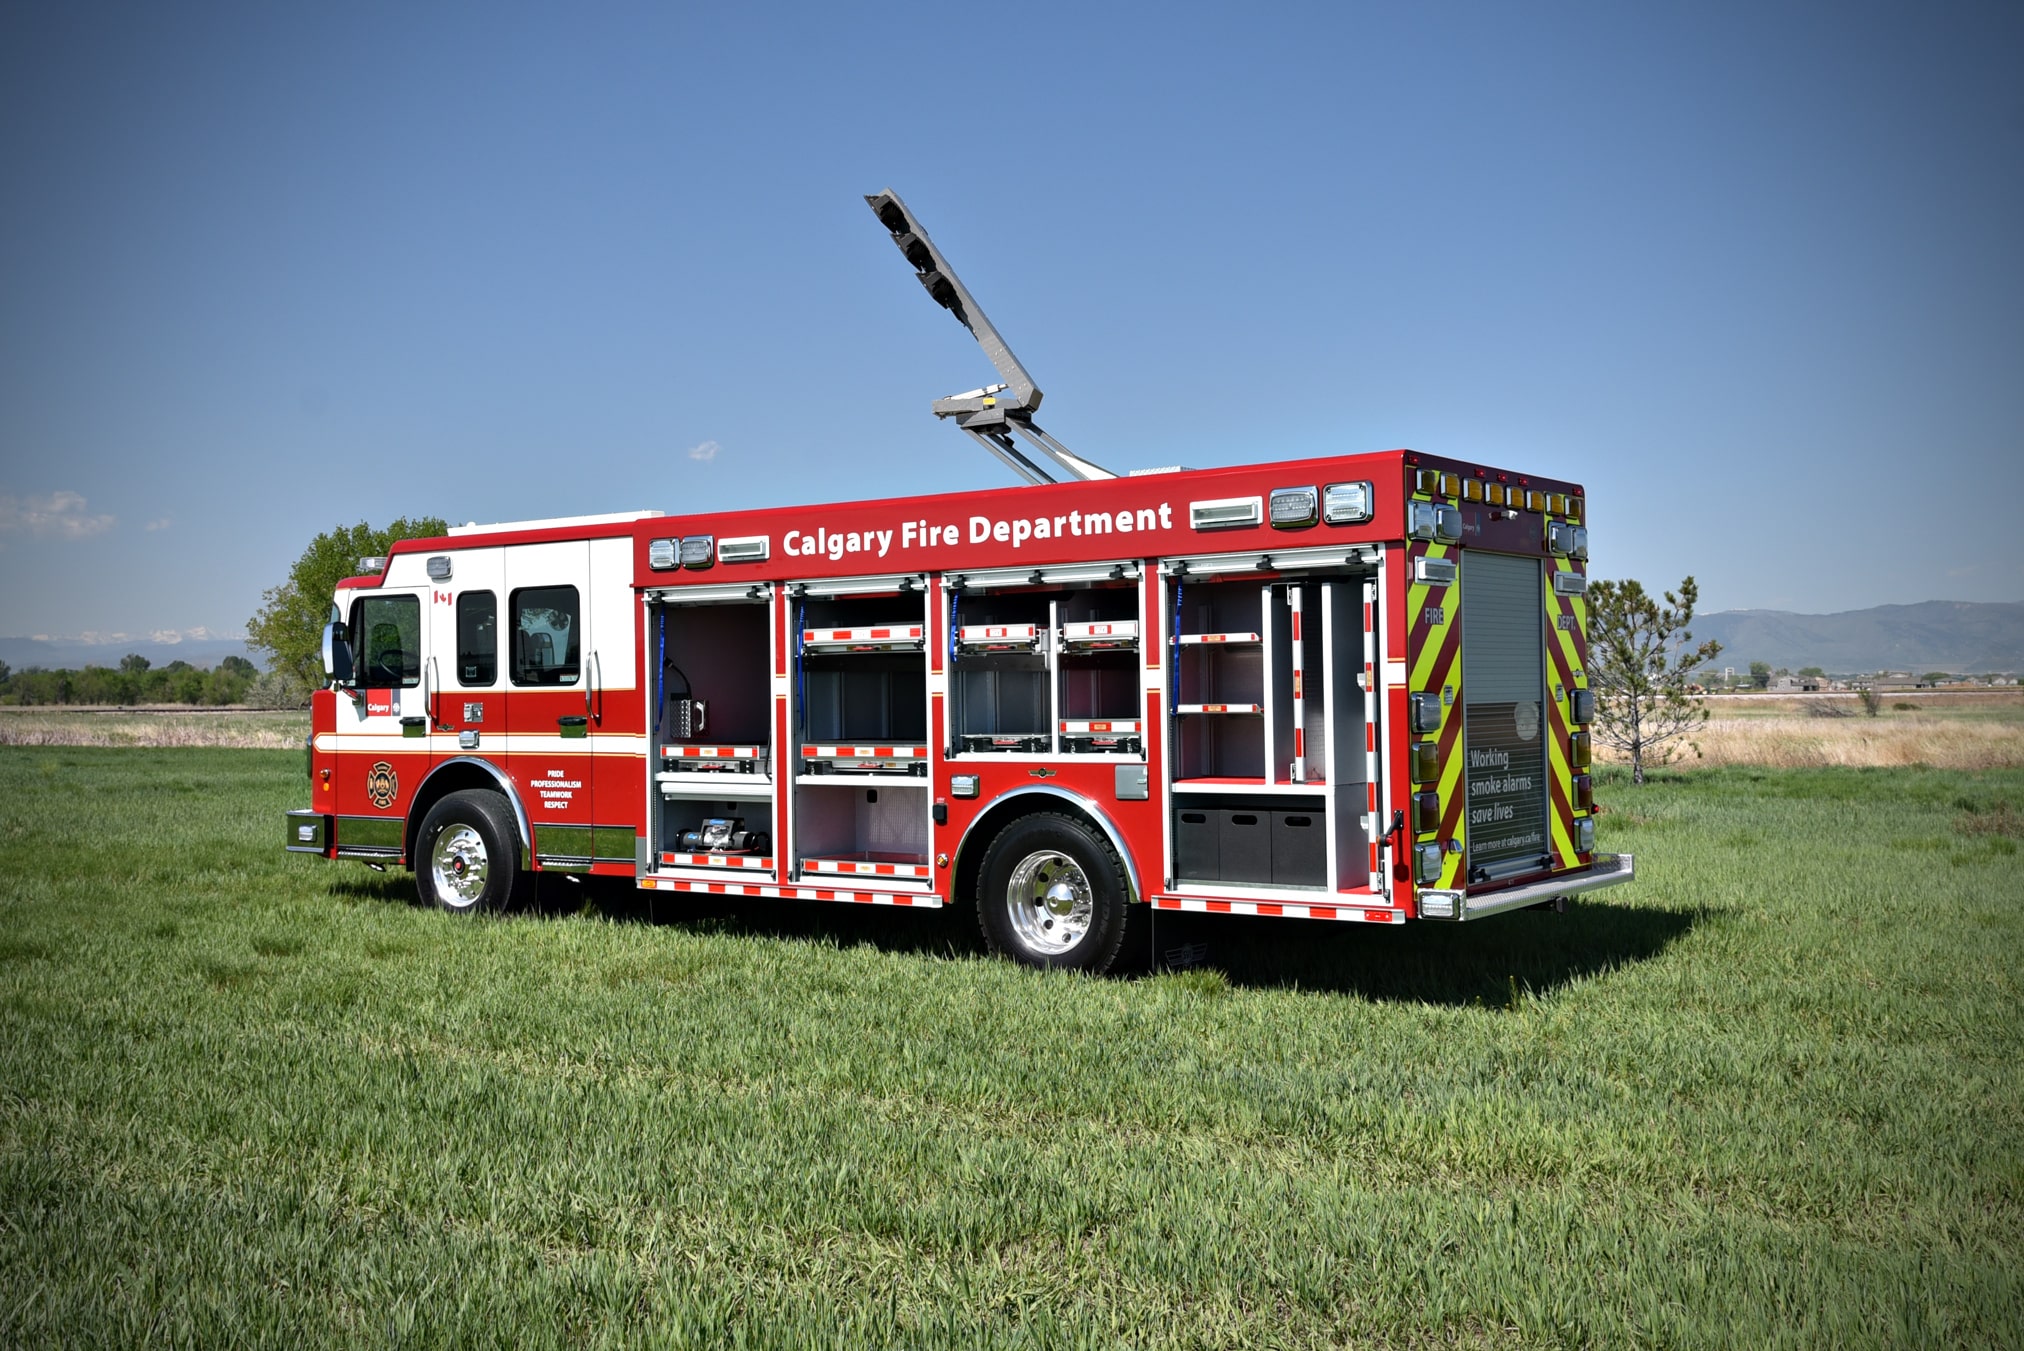 calgary-fire-department-heavy-rescue-1027-1031-svi-trucks